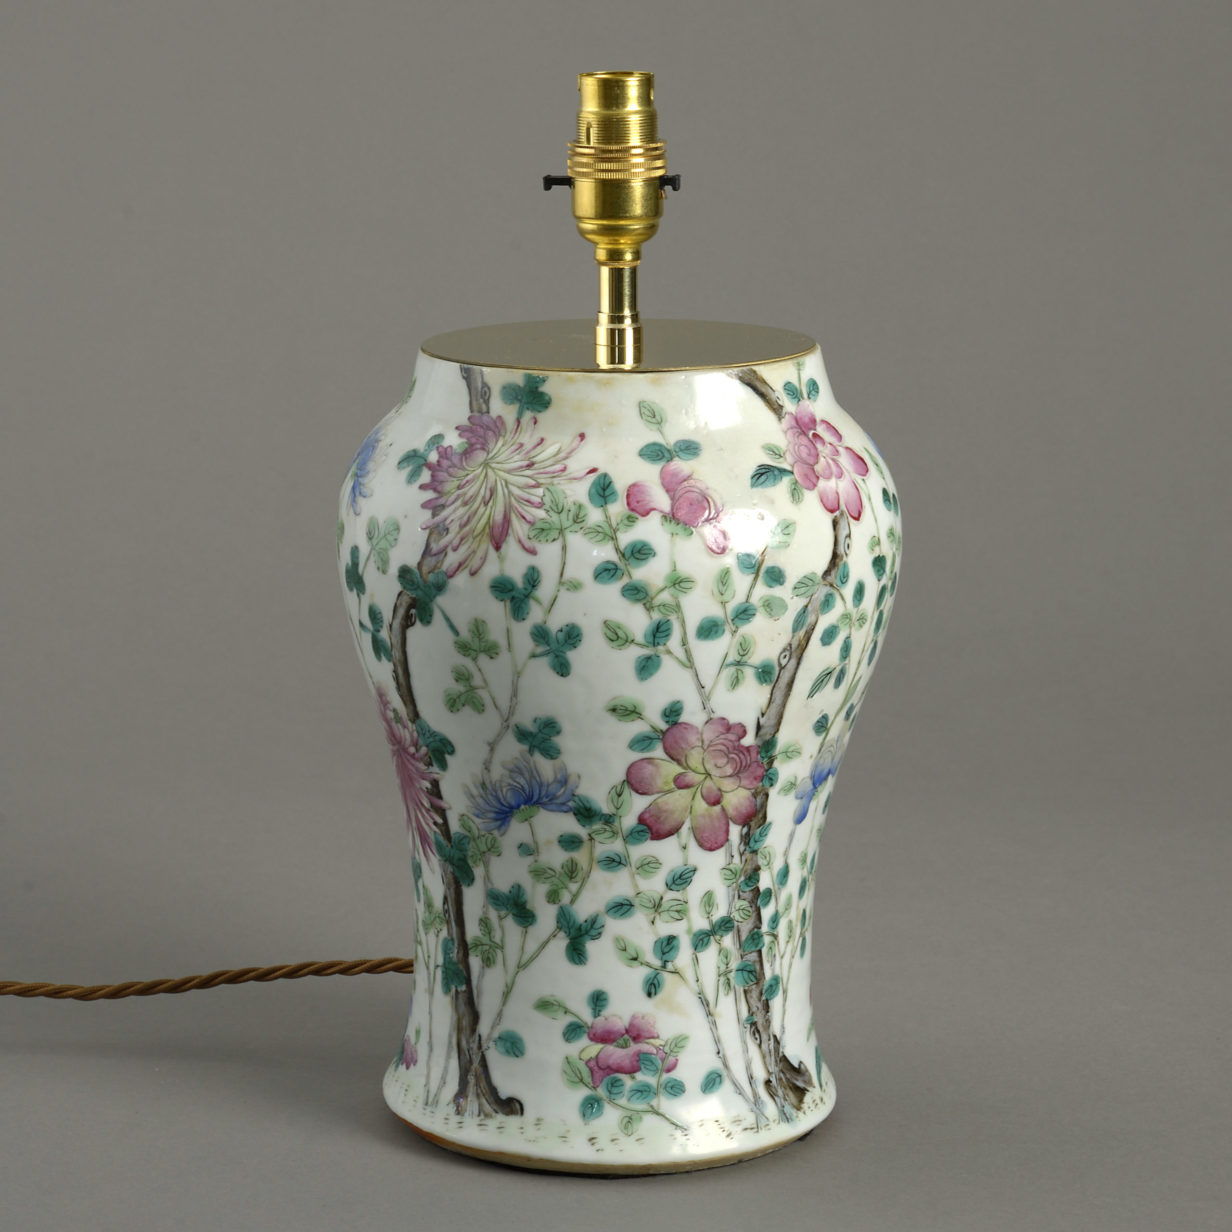 A 19th century famille rose vase lamp